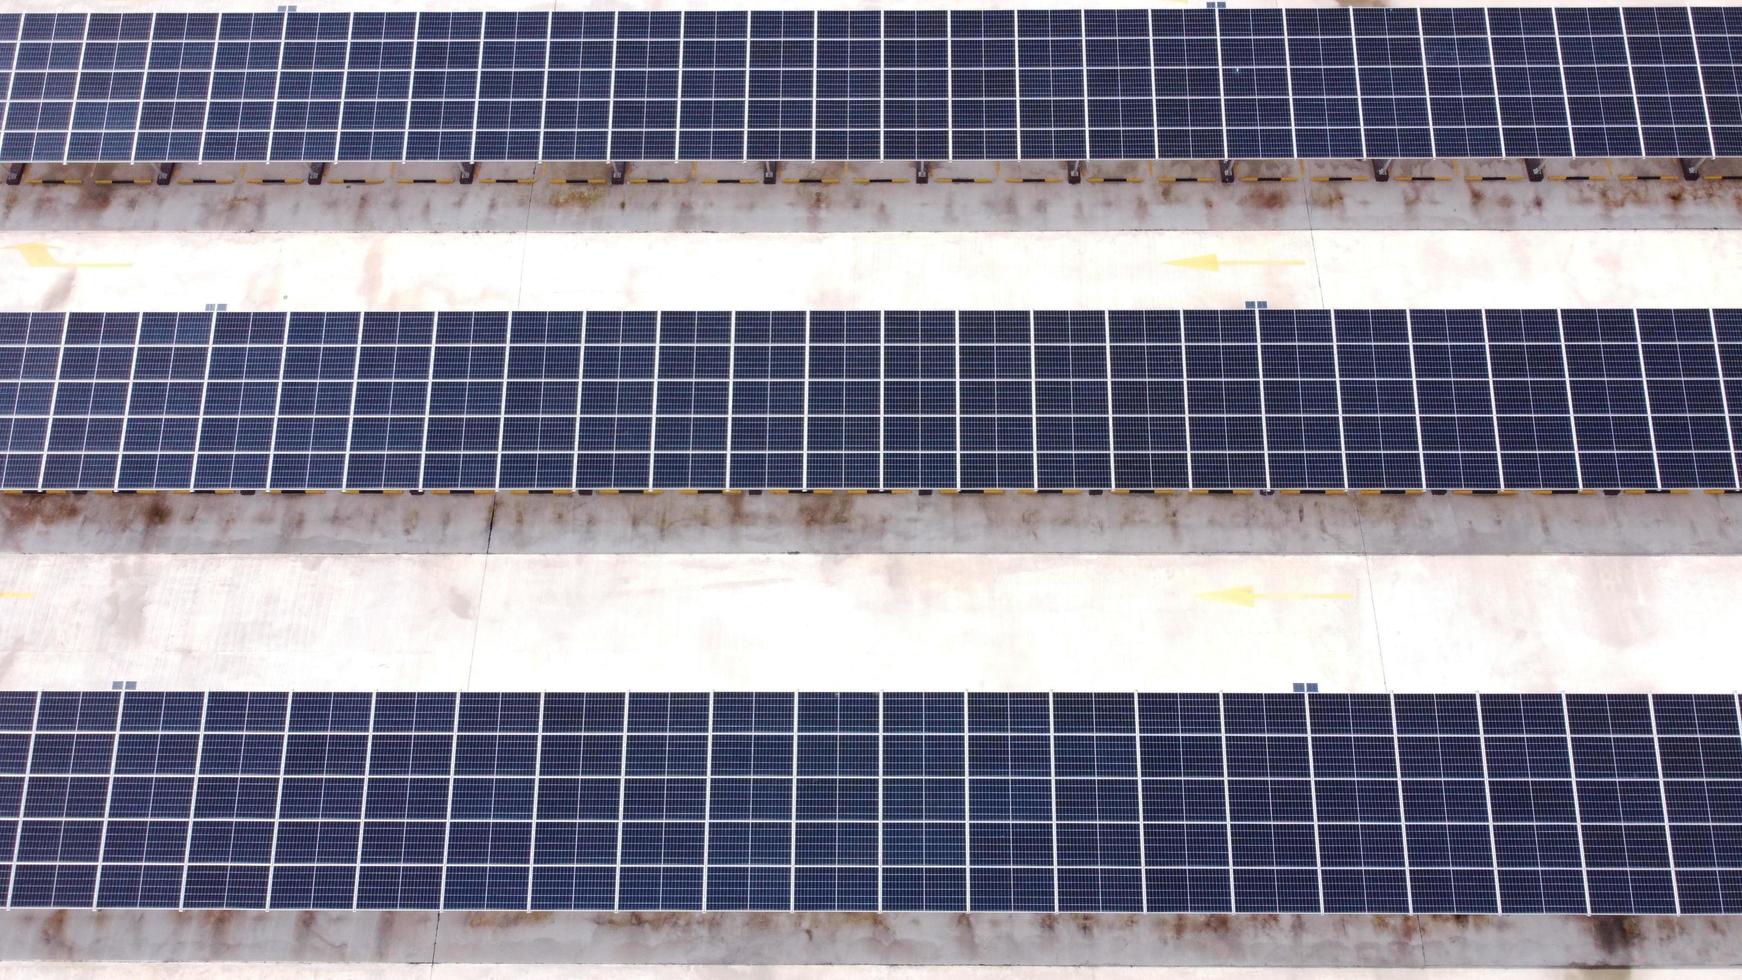 painéis de células solares nova energia elétrica alternativa foto